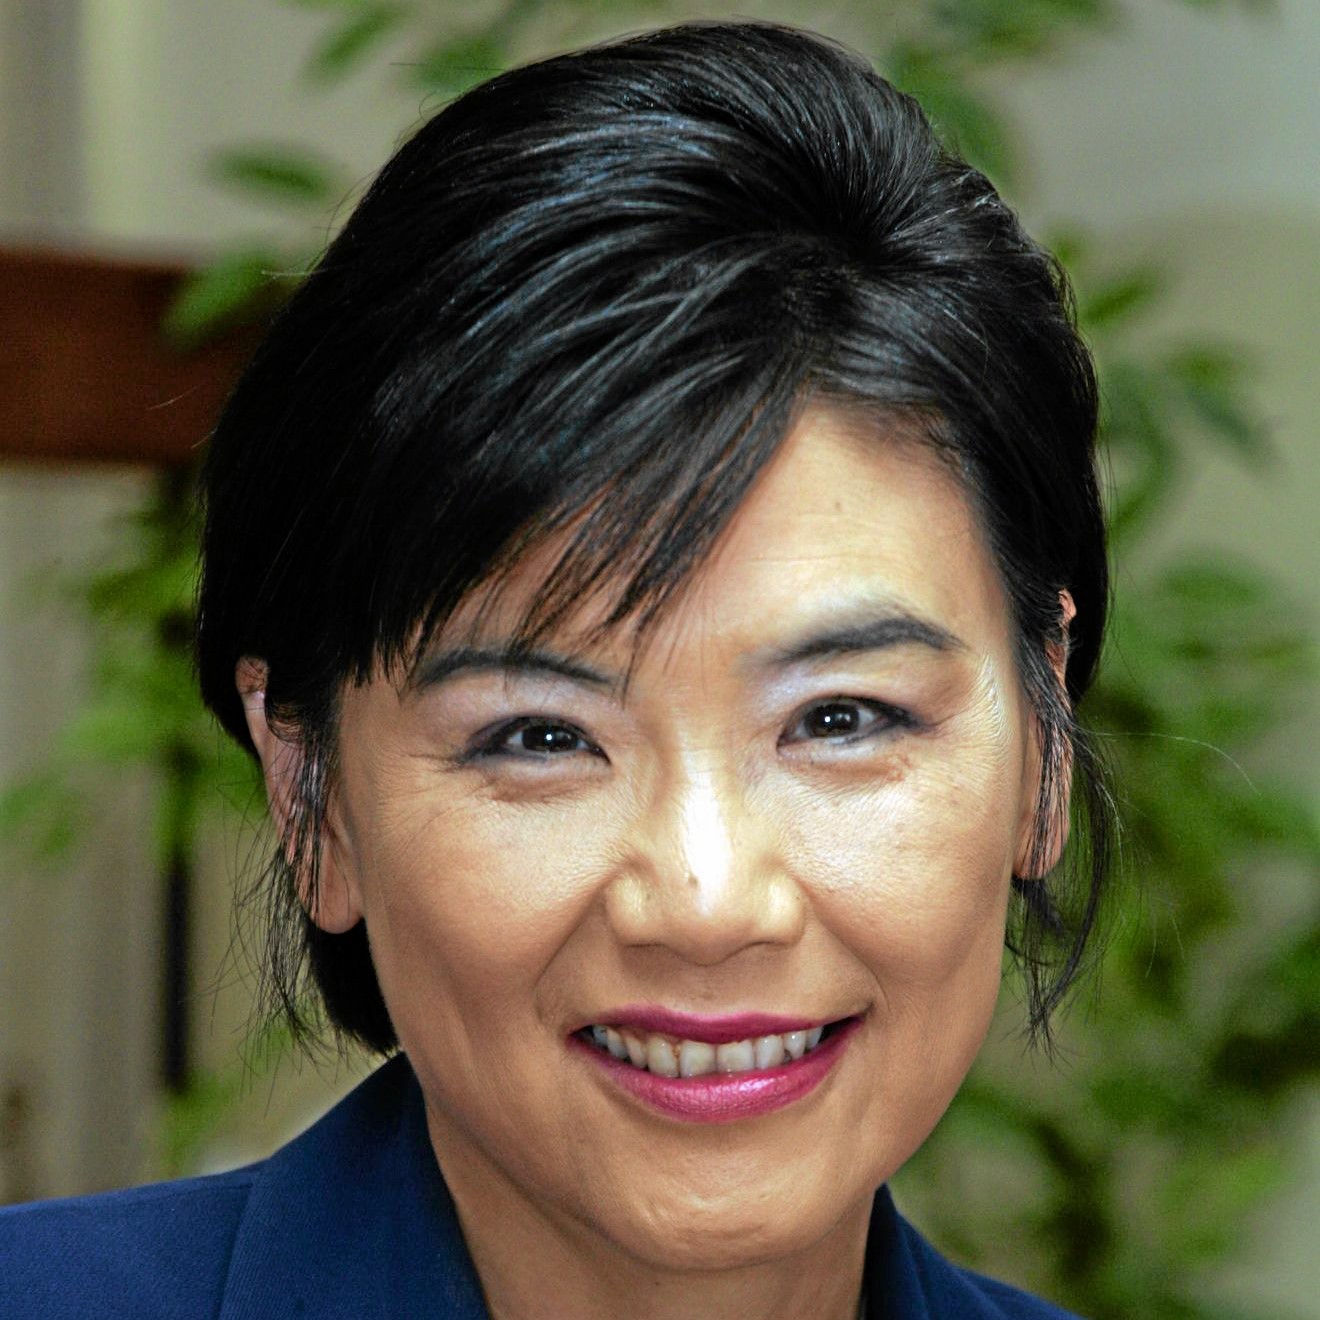 Representative Judy Chu